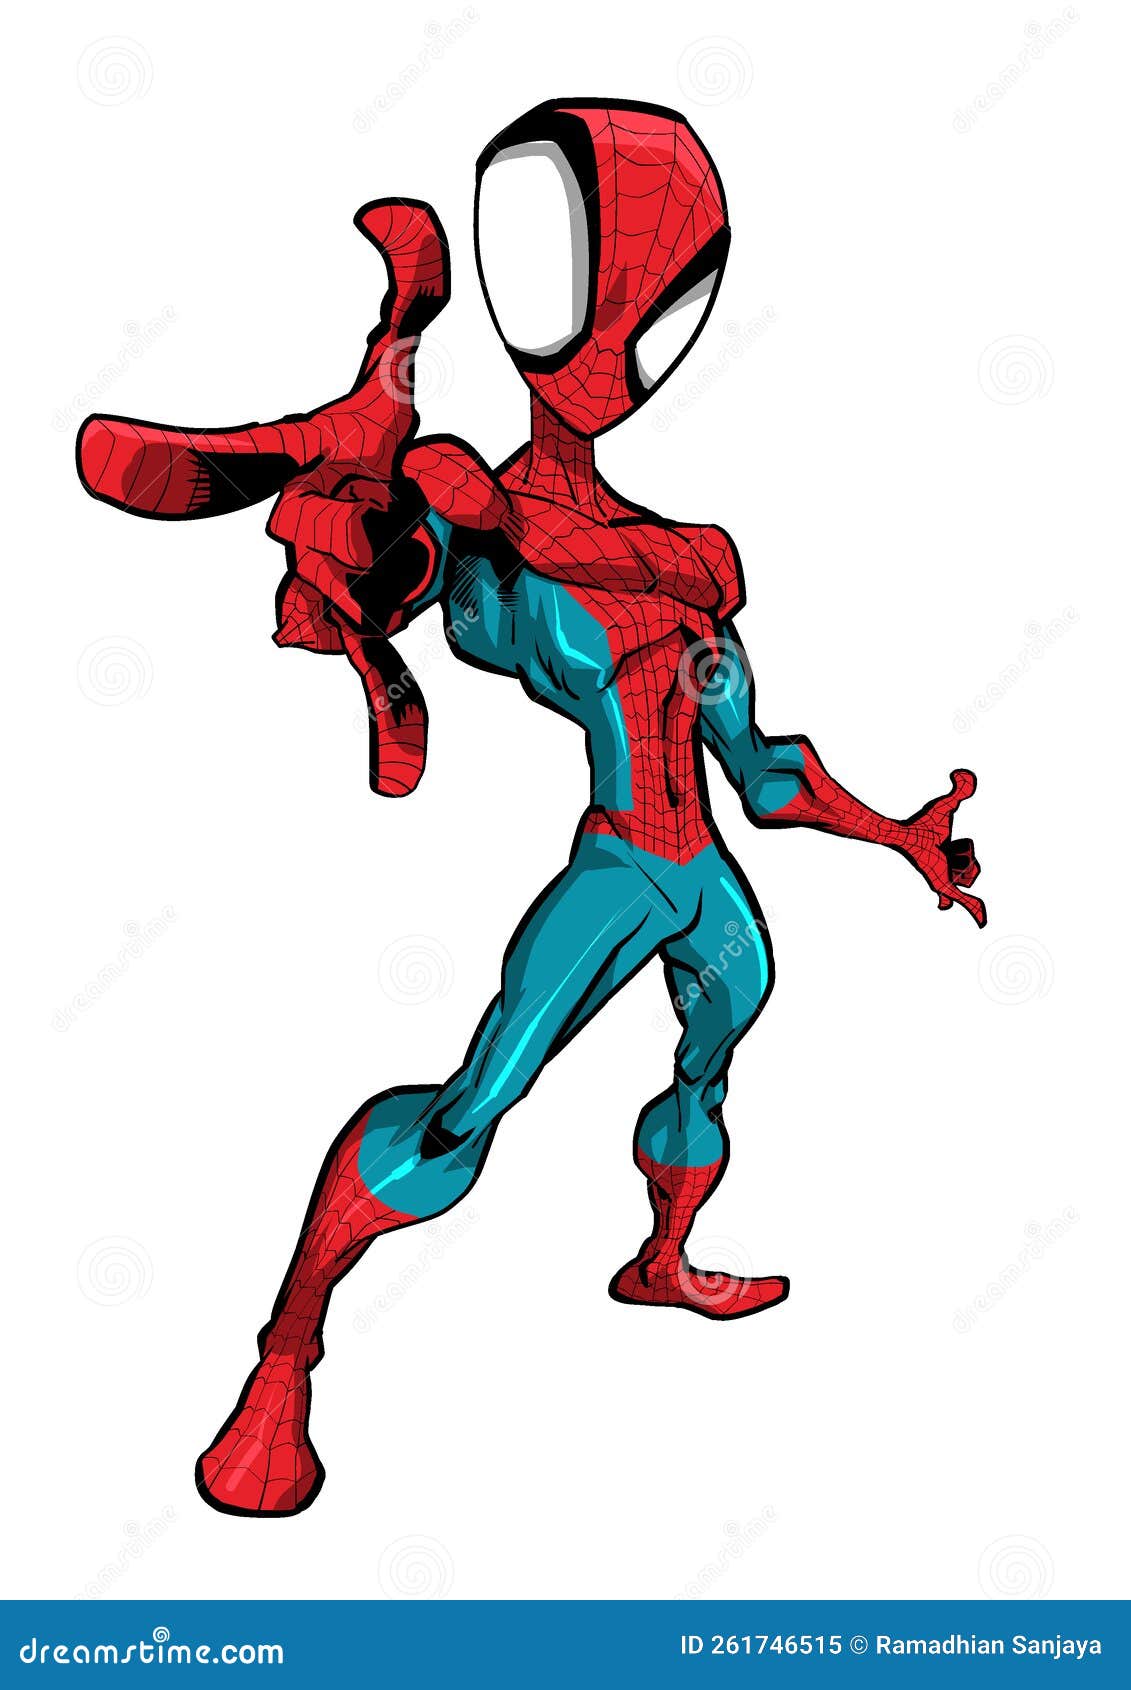 How to draw original spiderman poses｜TikTok Search